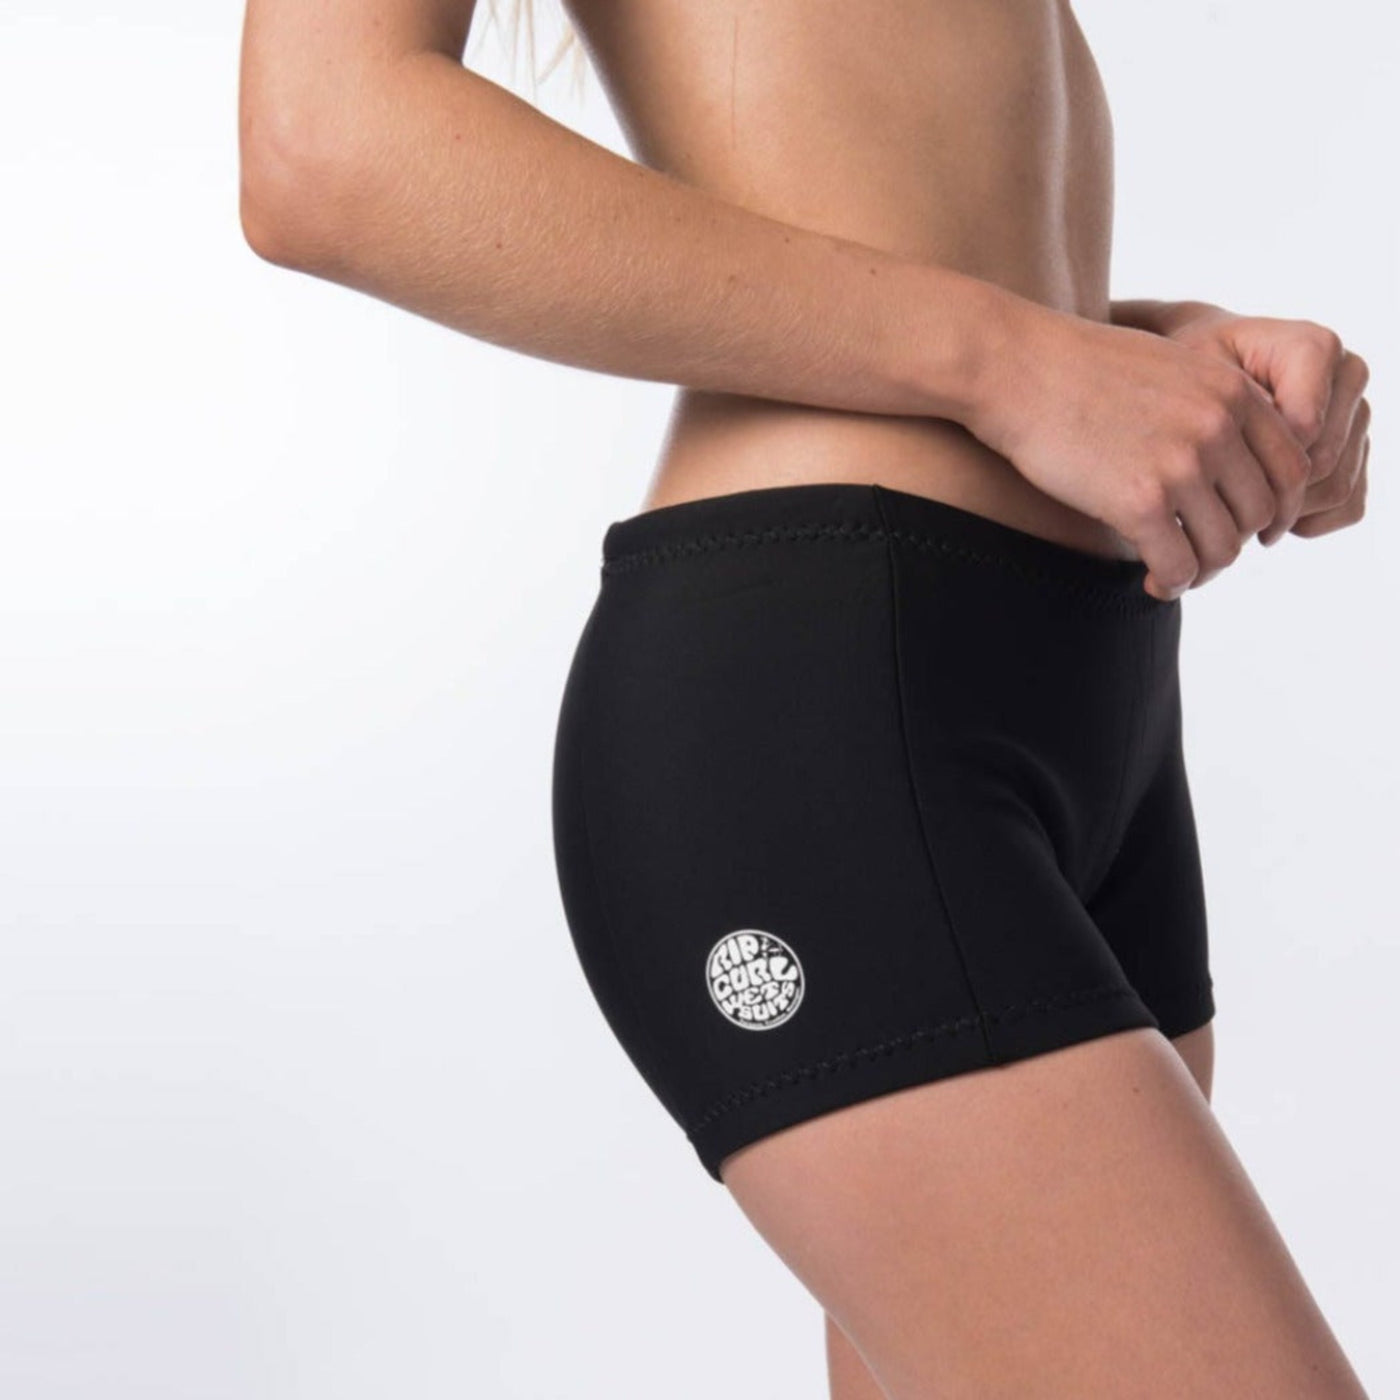 Rip Curl Women's G-Bomb Boyleg 1mm Wetsuit Shorts